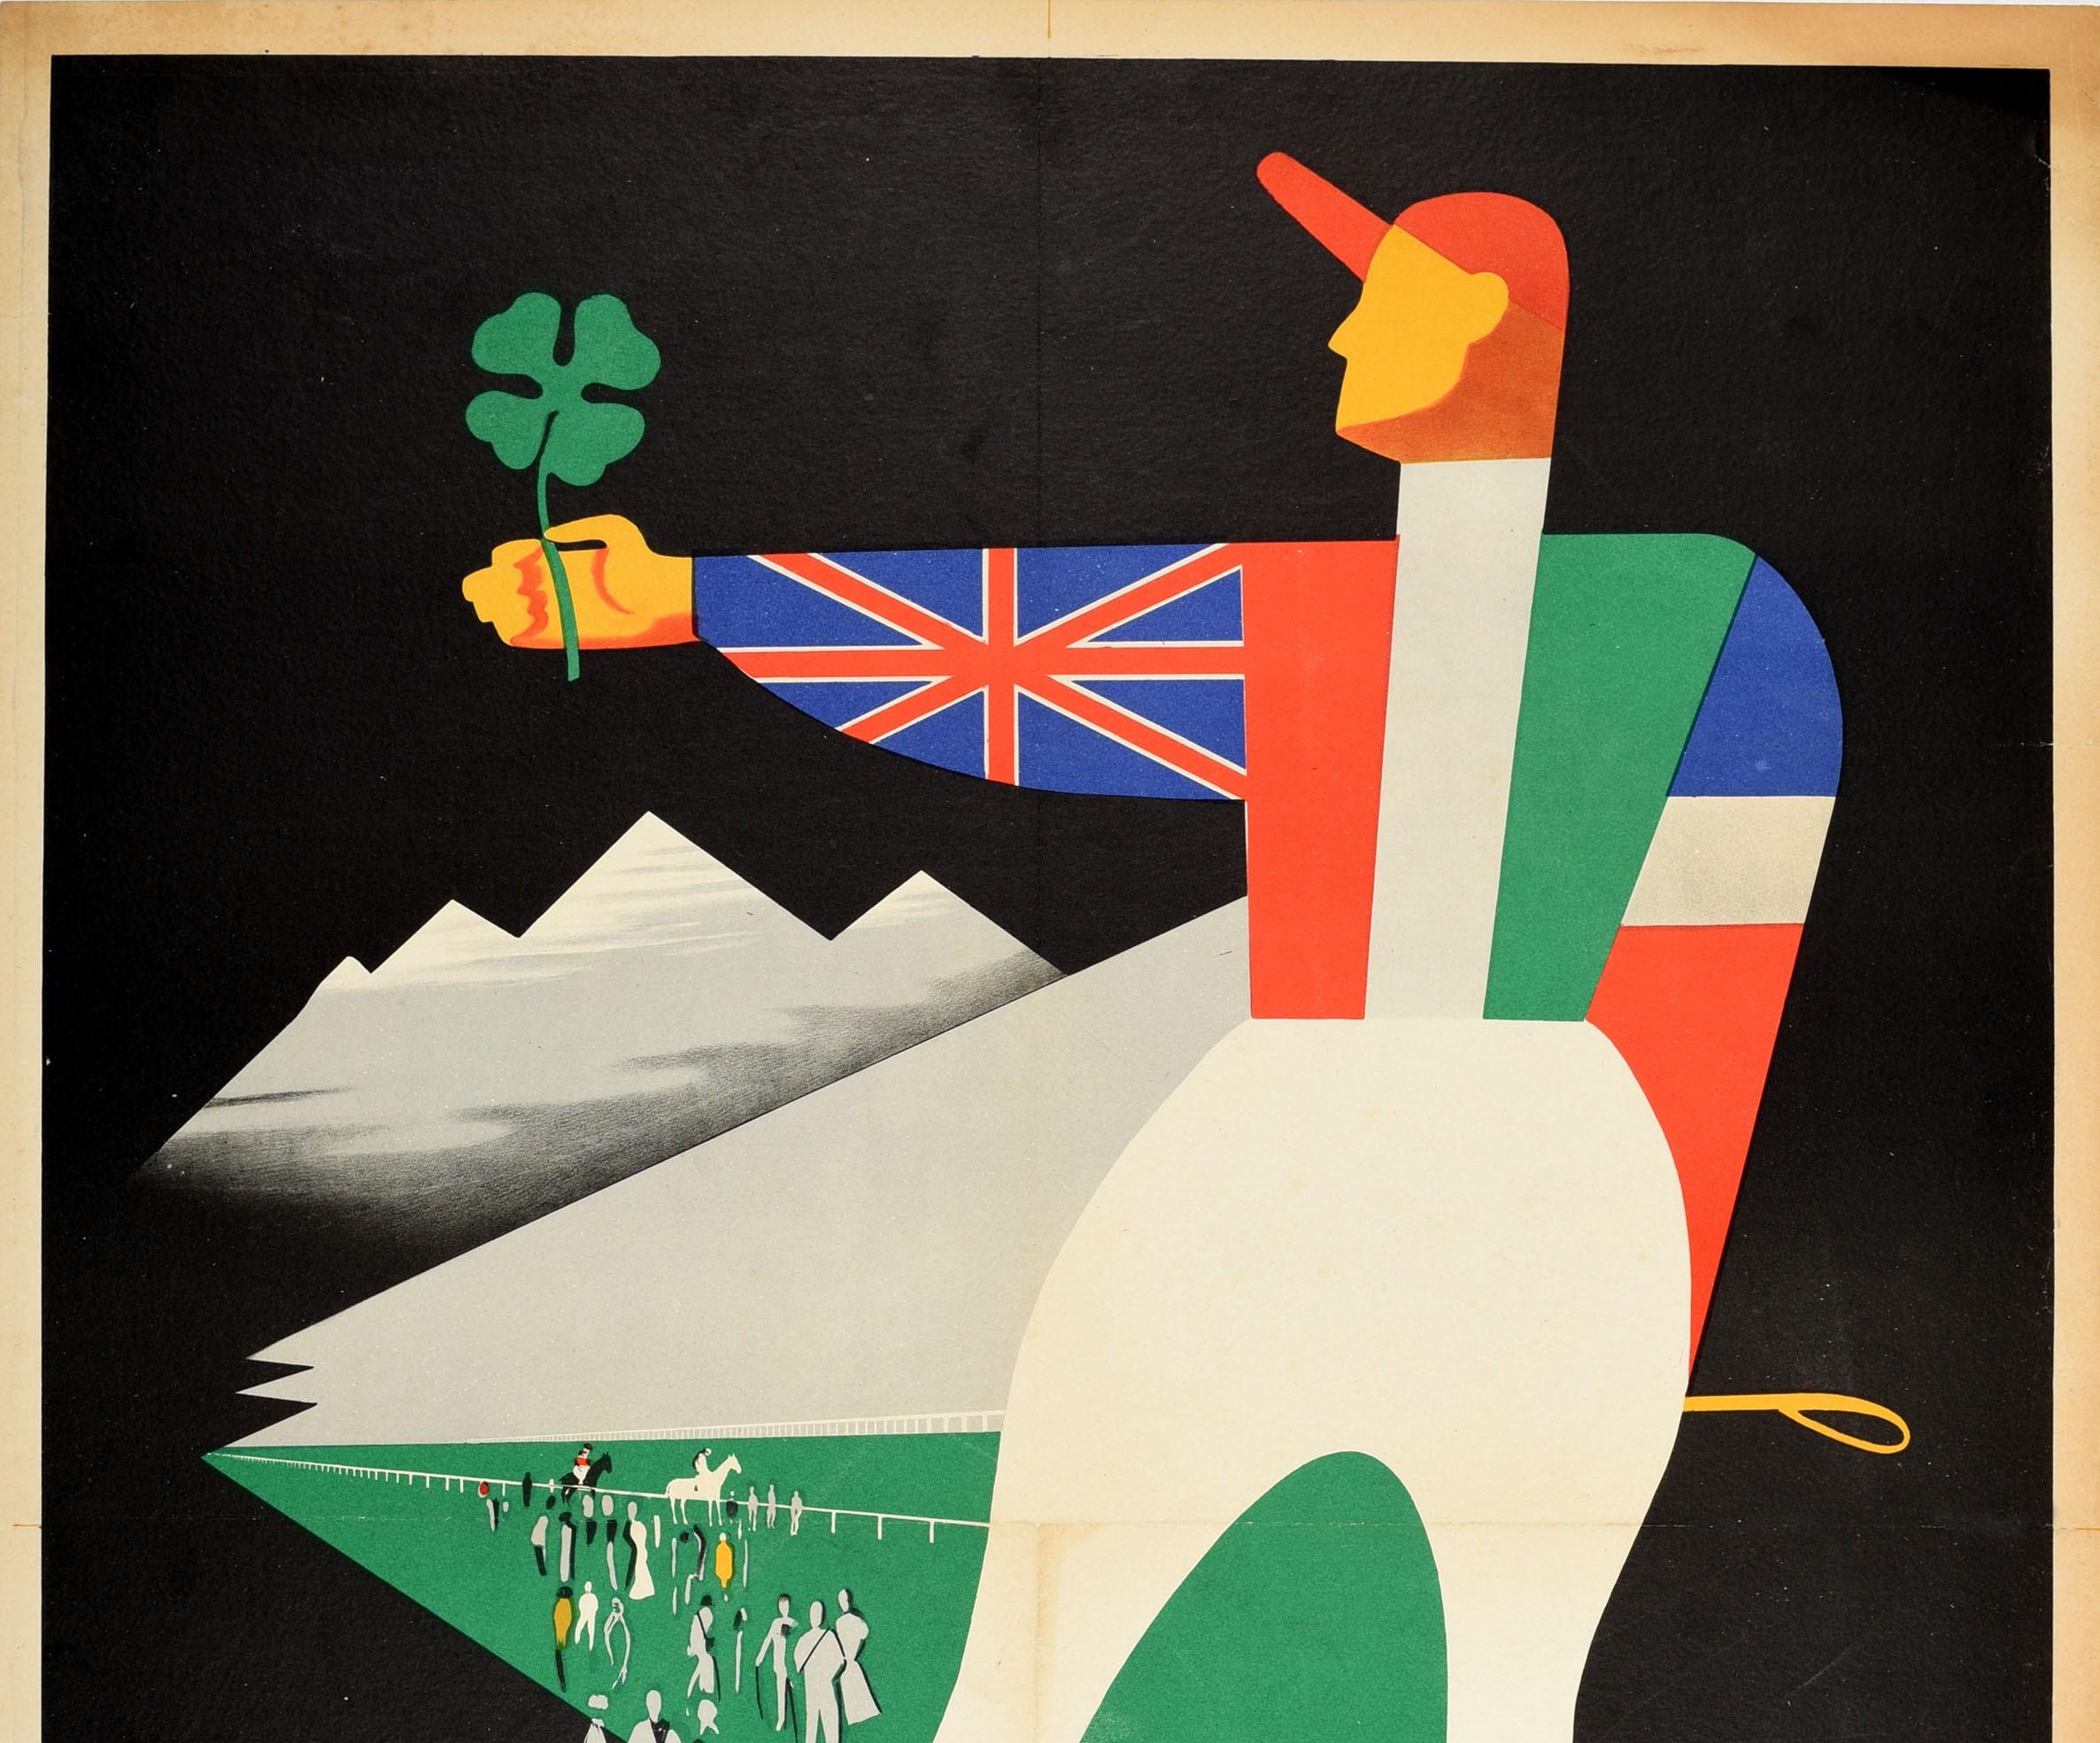 Original Vintage Sport Poster Merano Corse Al Galoppo Italy Gallop Horse Racing - Print by Unknown